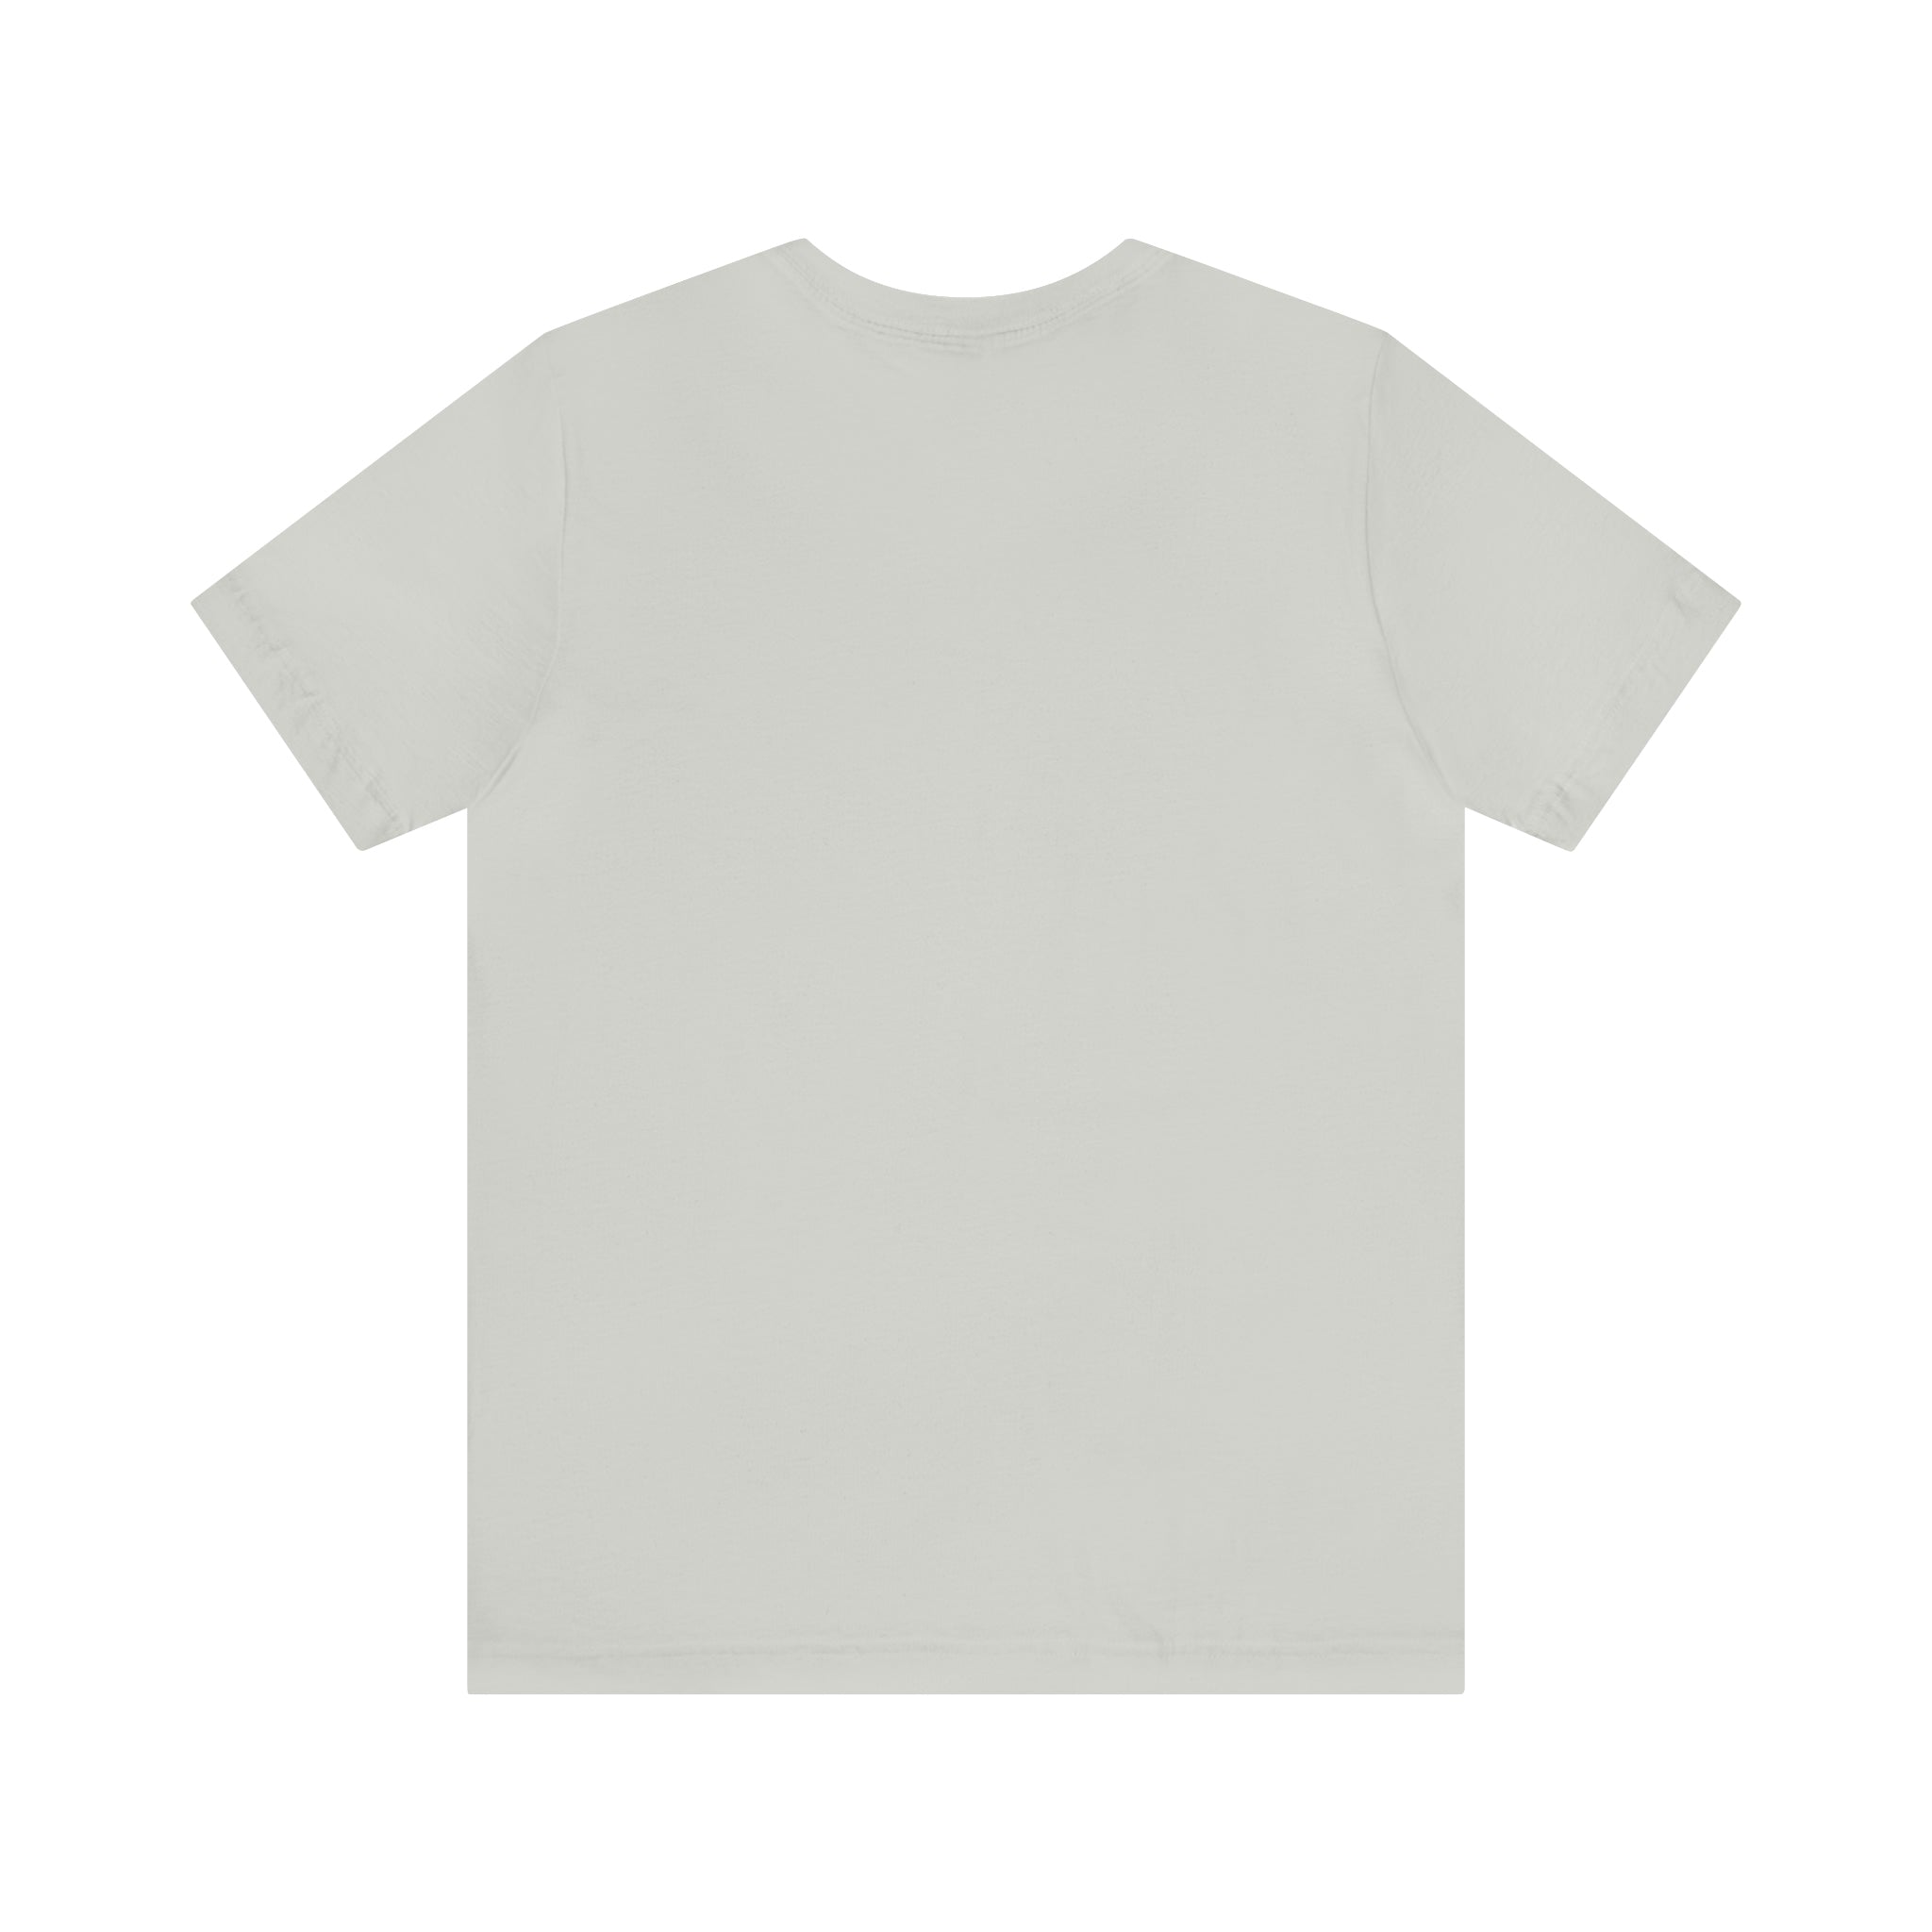 Printify T-Shirt Smart Ass (Donkey) - Unisex Jersey Short Sleeve Tee